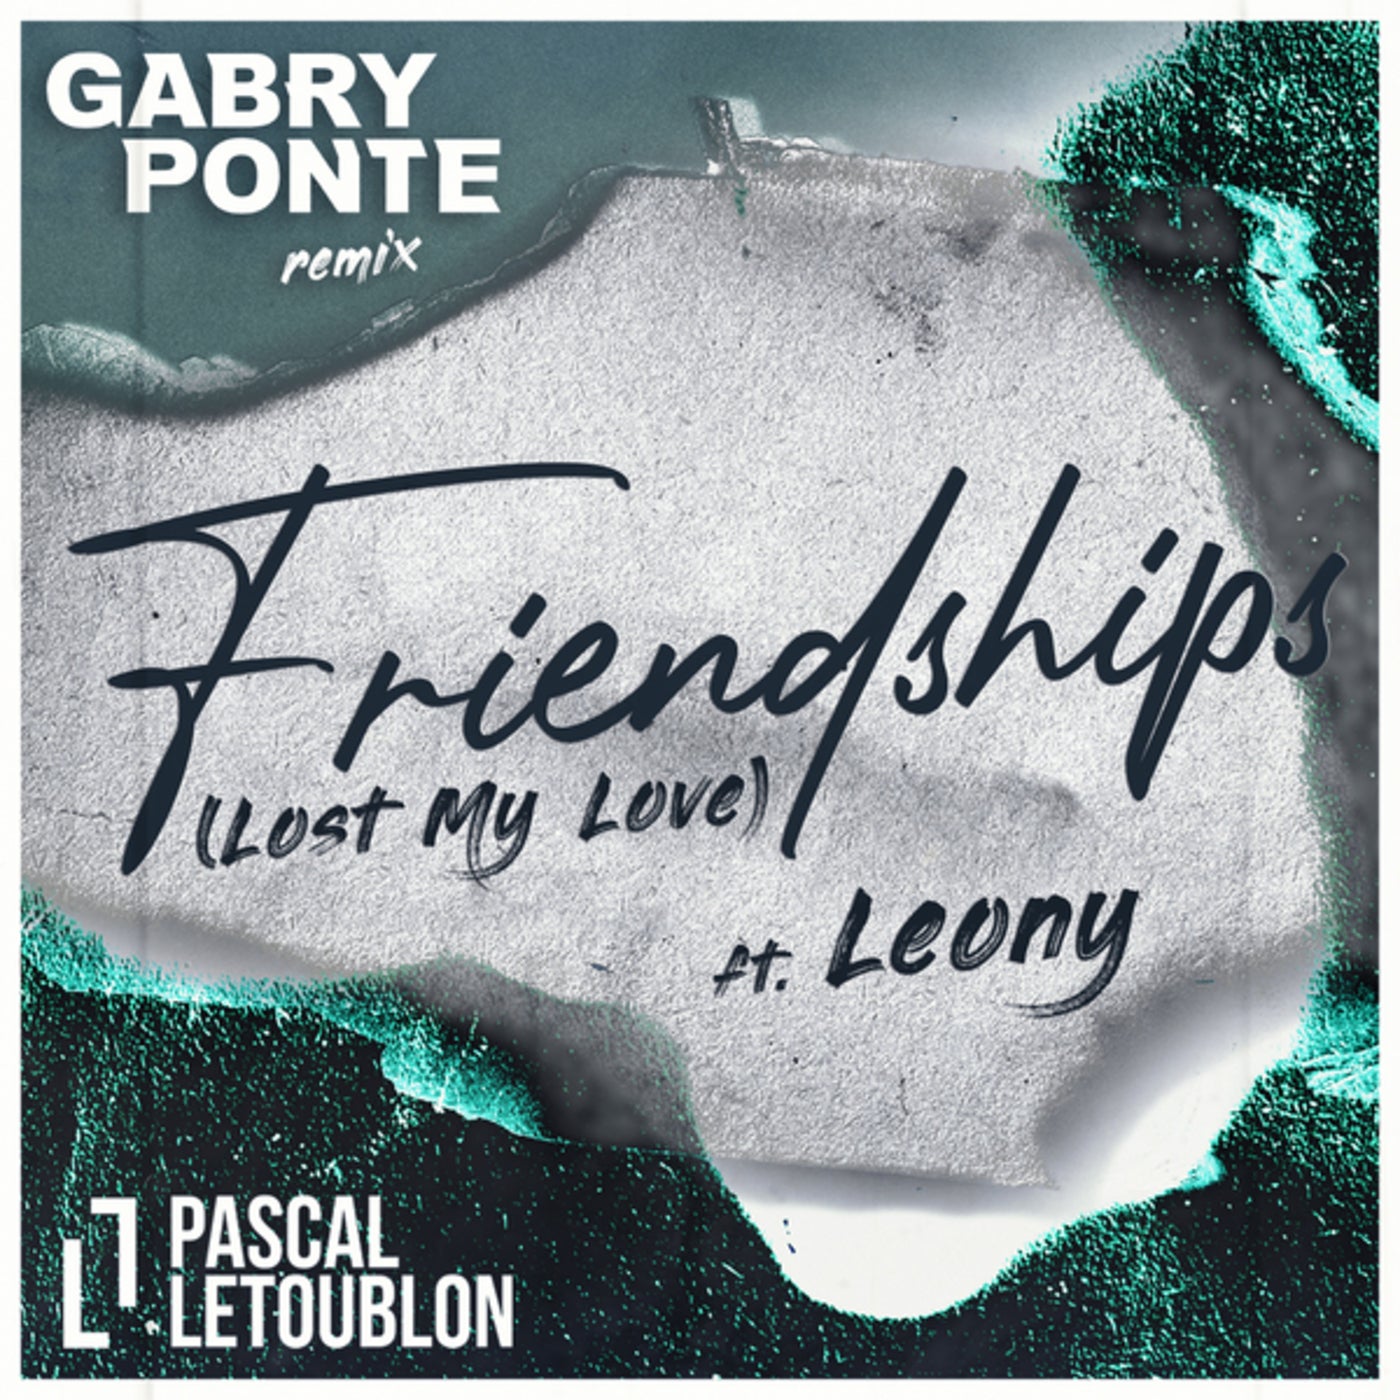 Pascal letoublon рингтон. Pascal Letoublon Friendships. Pascal Letoublon, Leony - Friendships (Lost my Love). Gabry Ponte 2022. Friendships (Lost my Love) [feat. Leony!].